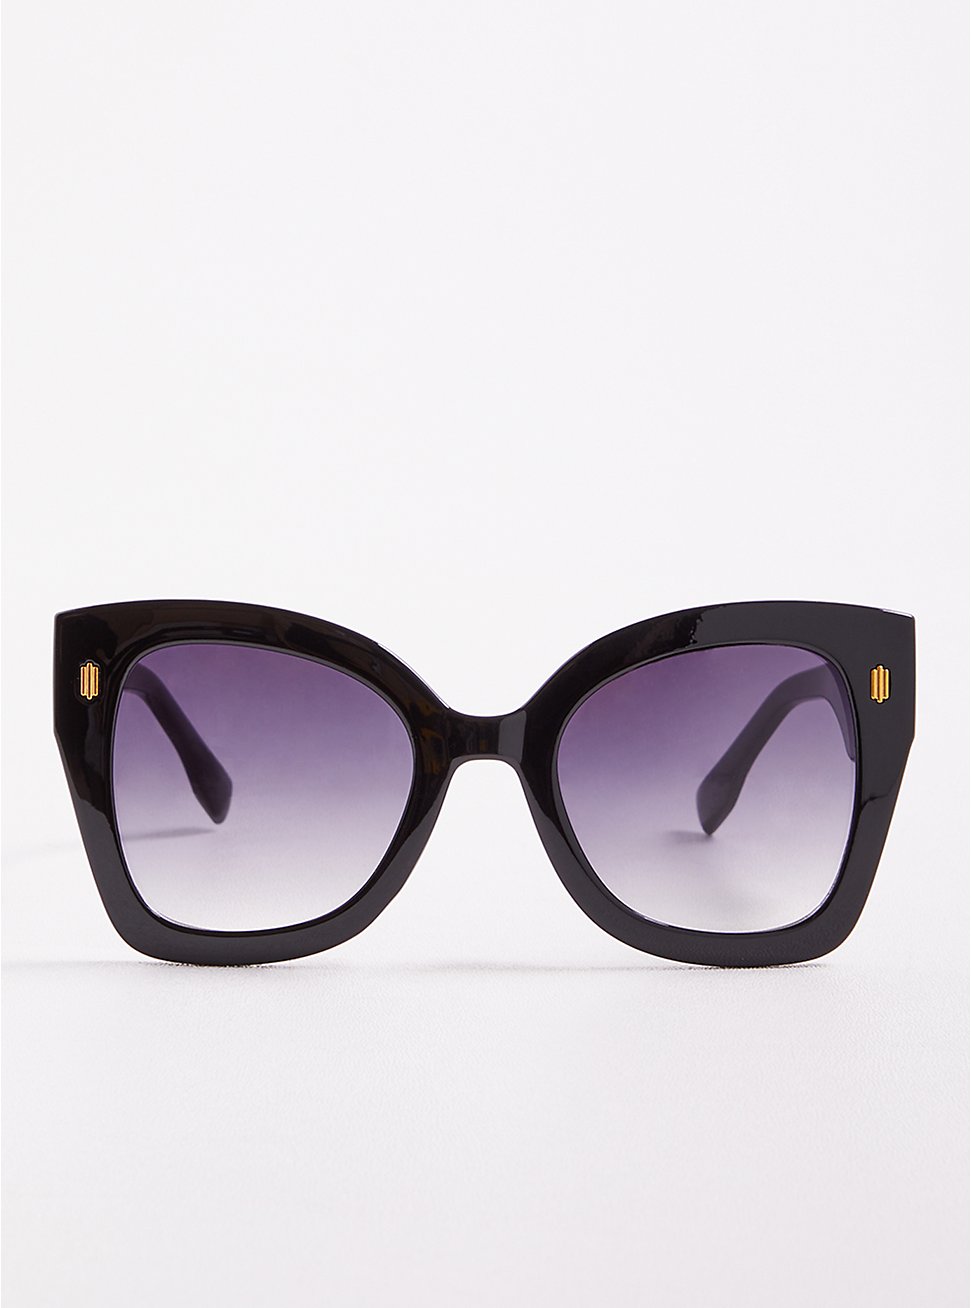 Cateye Sunglasses - Black with Smoke Lense, , hi-res